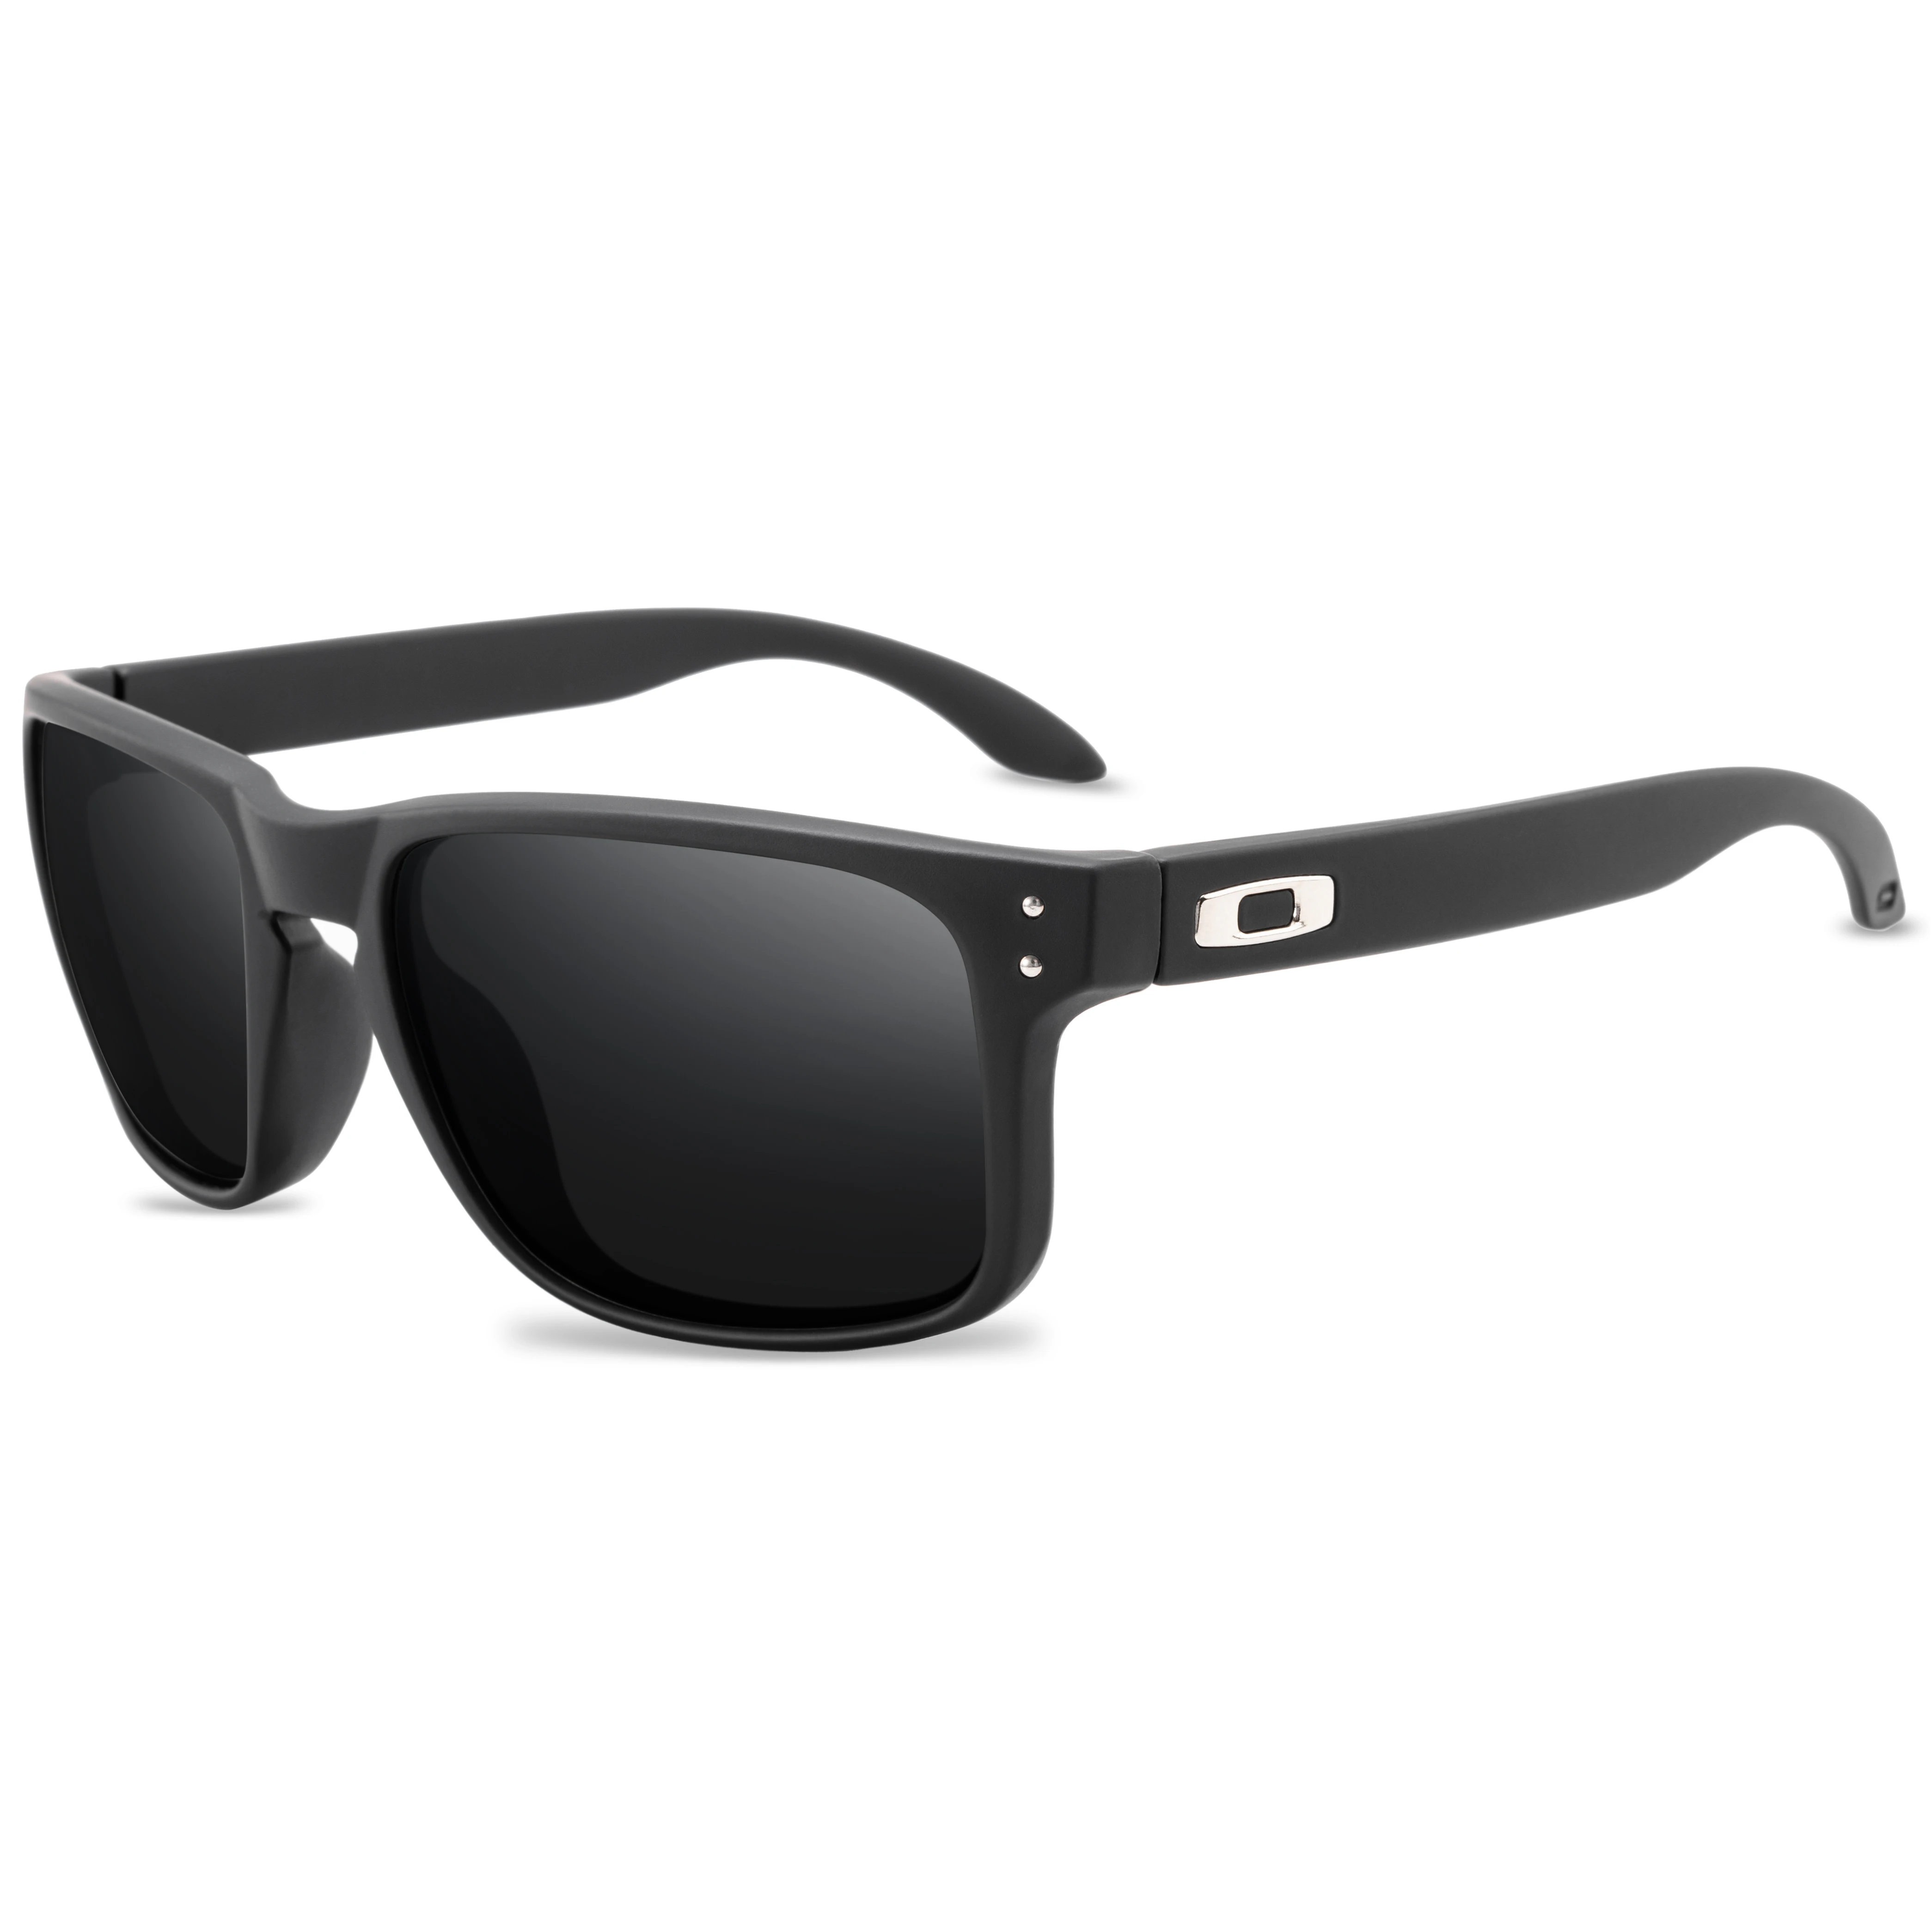 NEW ORIGINAL polarized sunglasses unisex with a cheap price